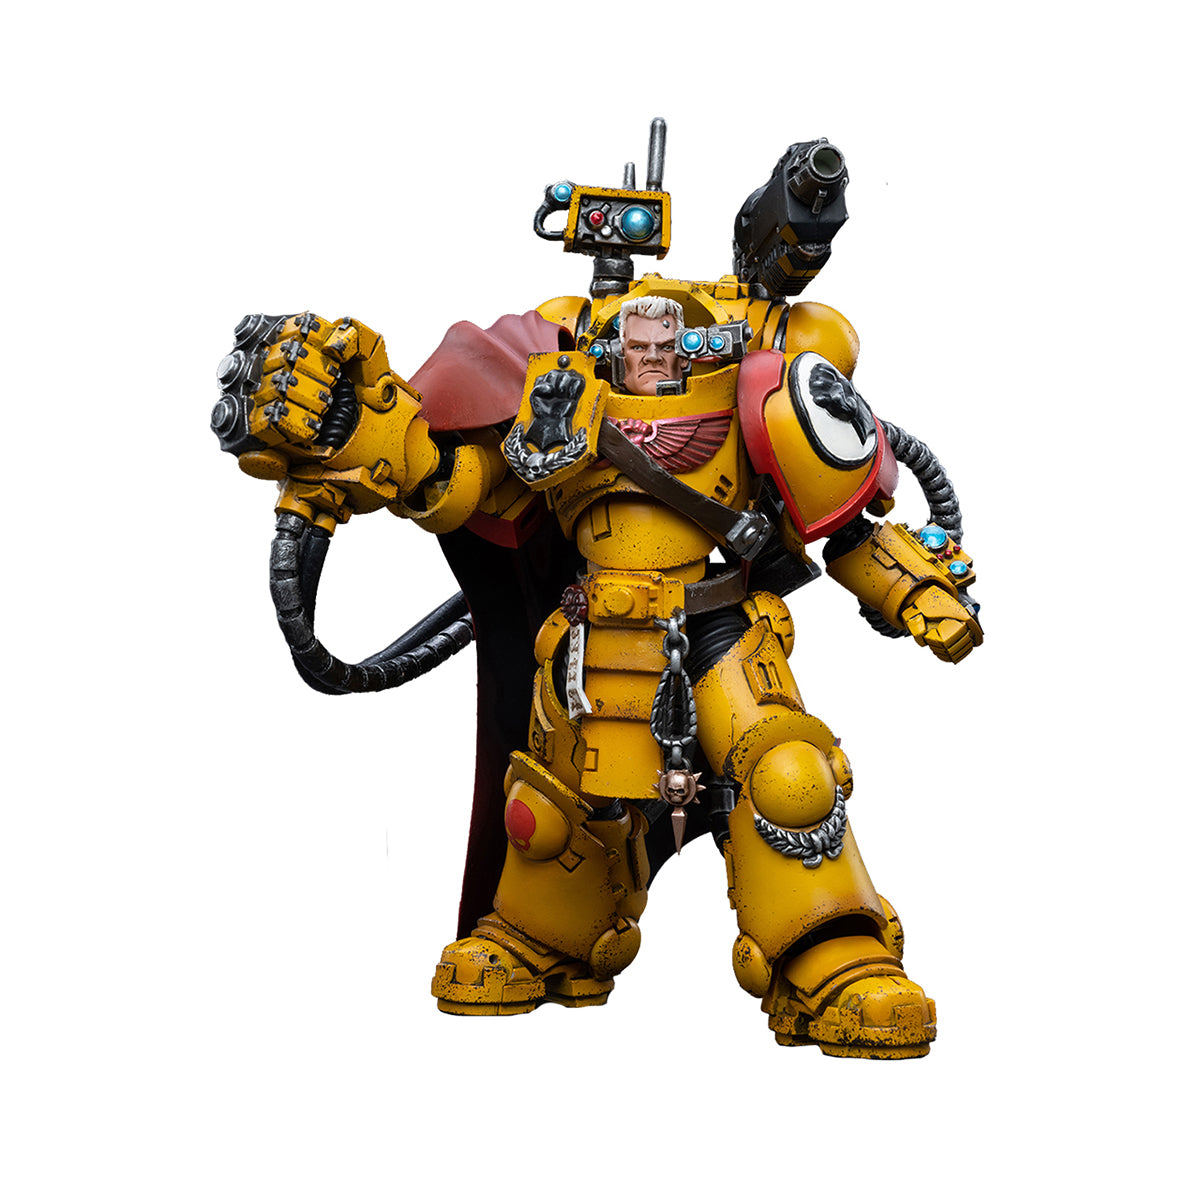 Imperial Fists Third Captain Tor Garadon (Warhammer 40K)